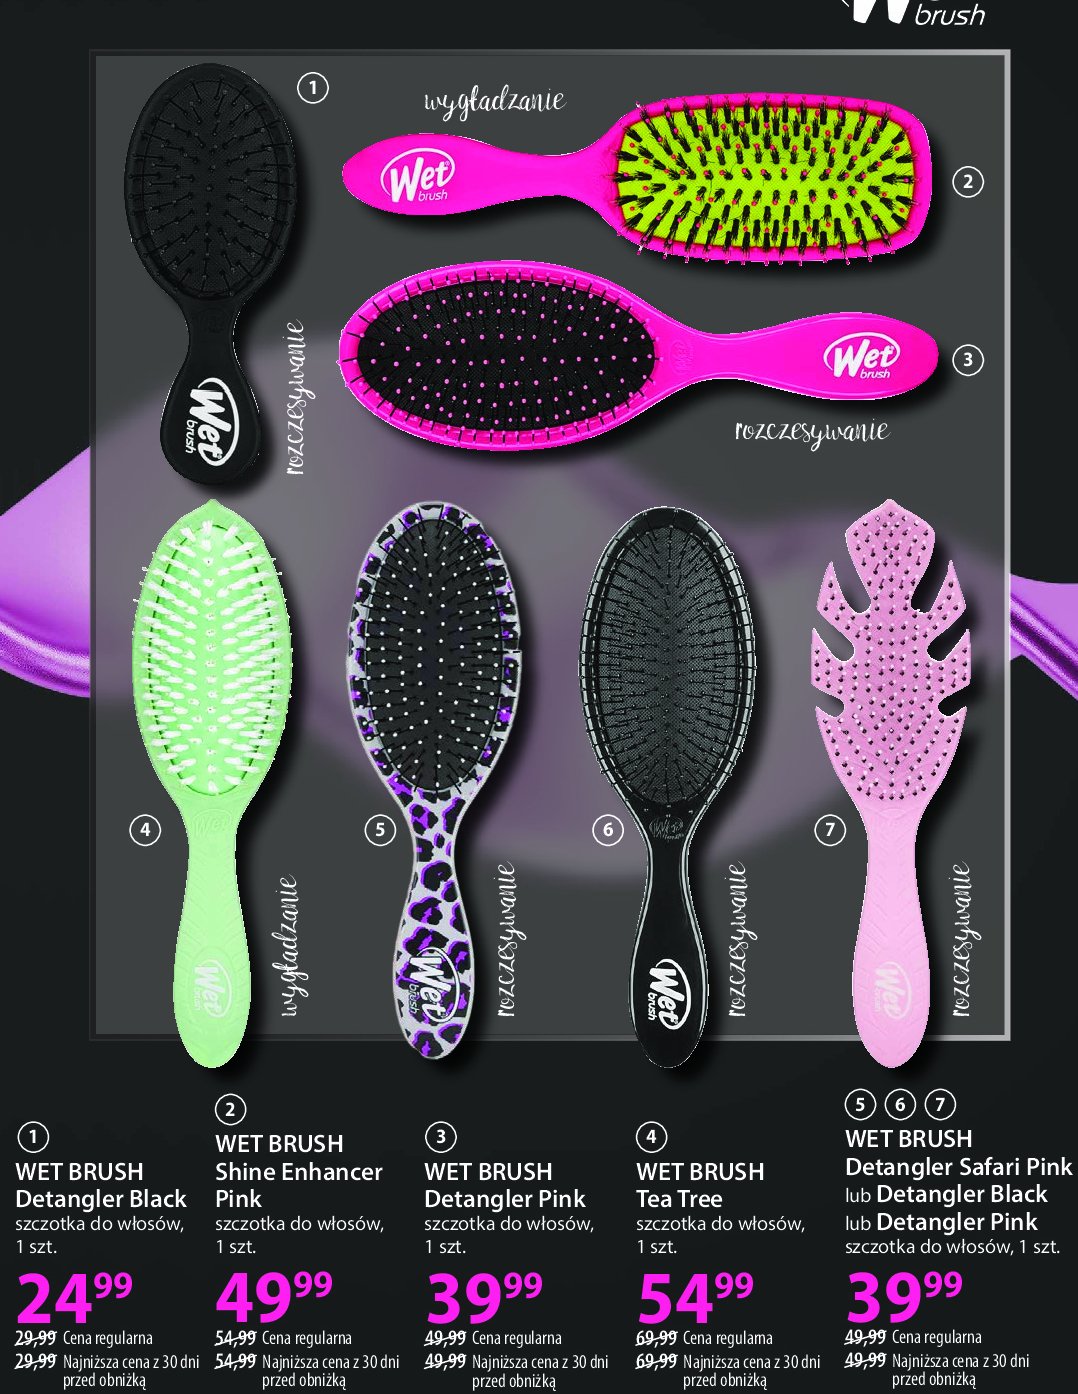 Szczotka do włosów detangler safari pink Wet brush promocja